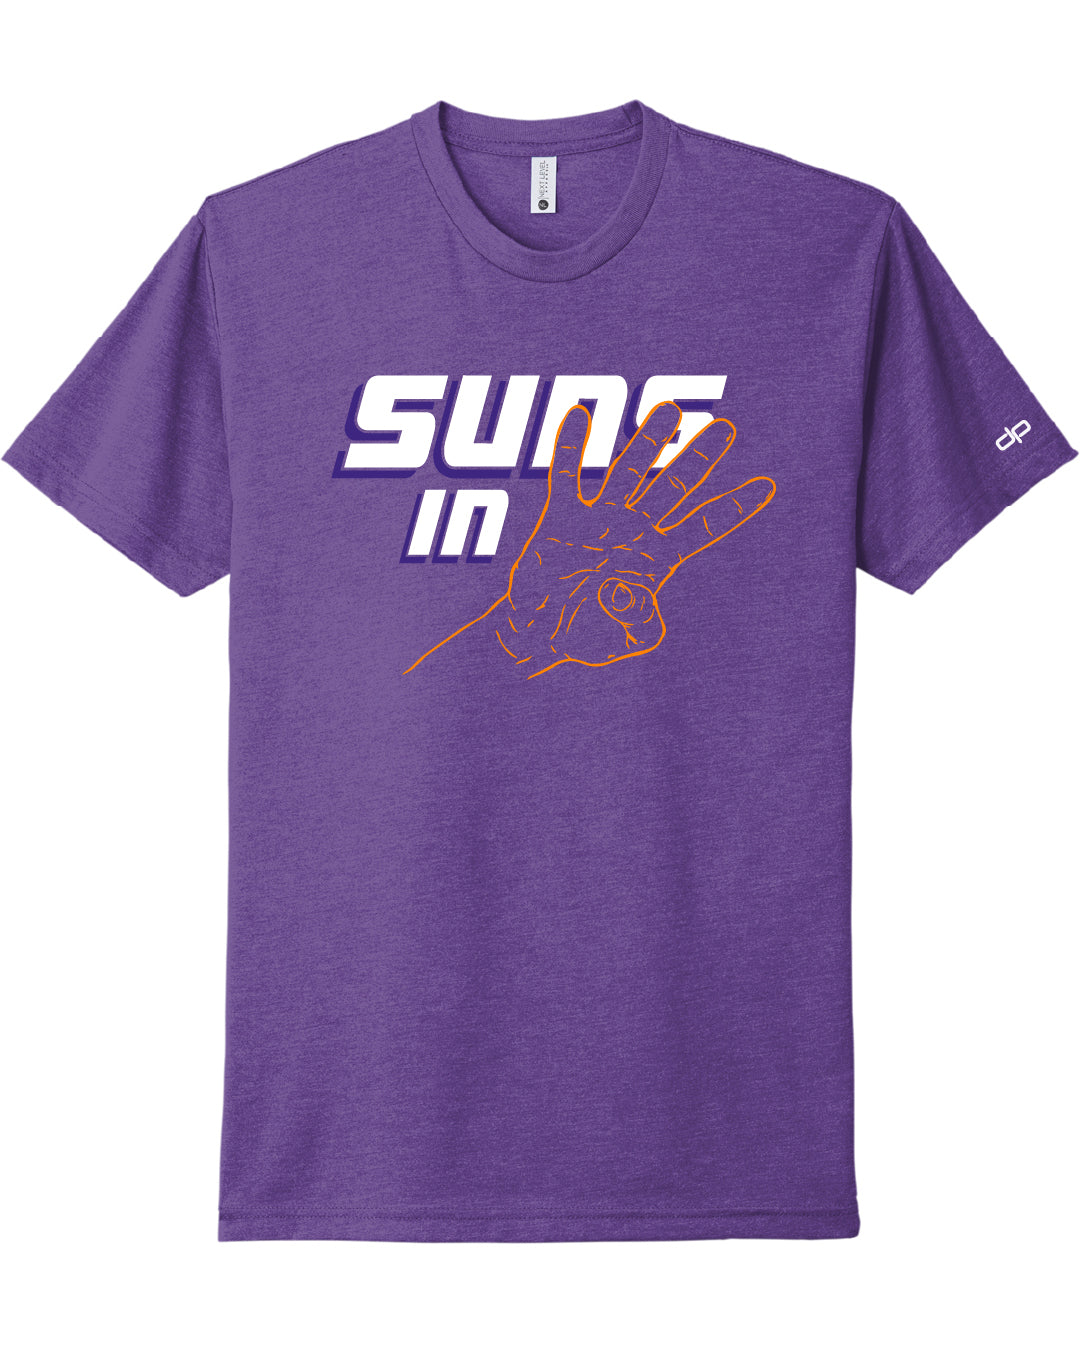 Suns in 4 T-Shirt